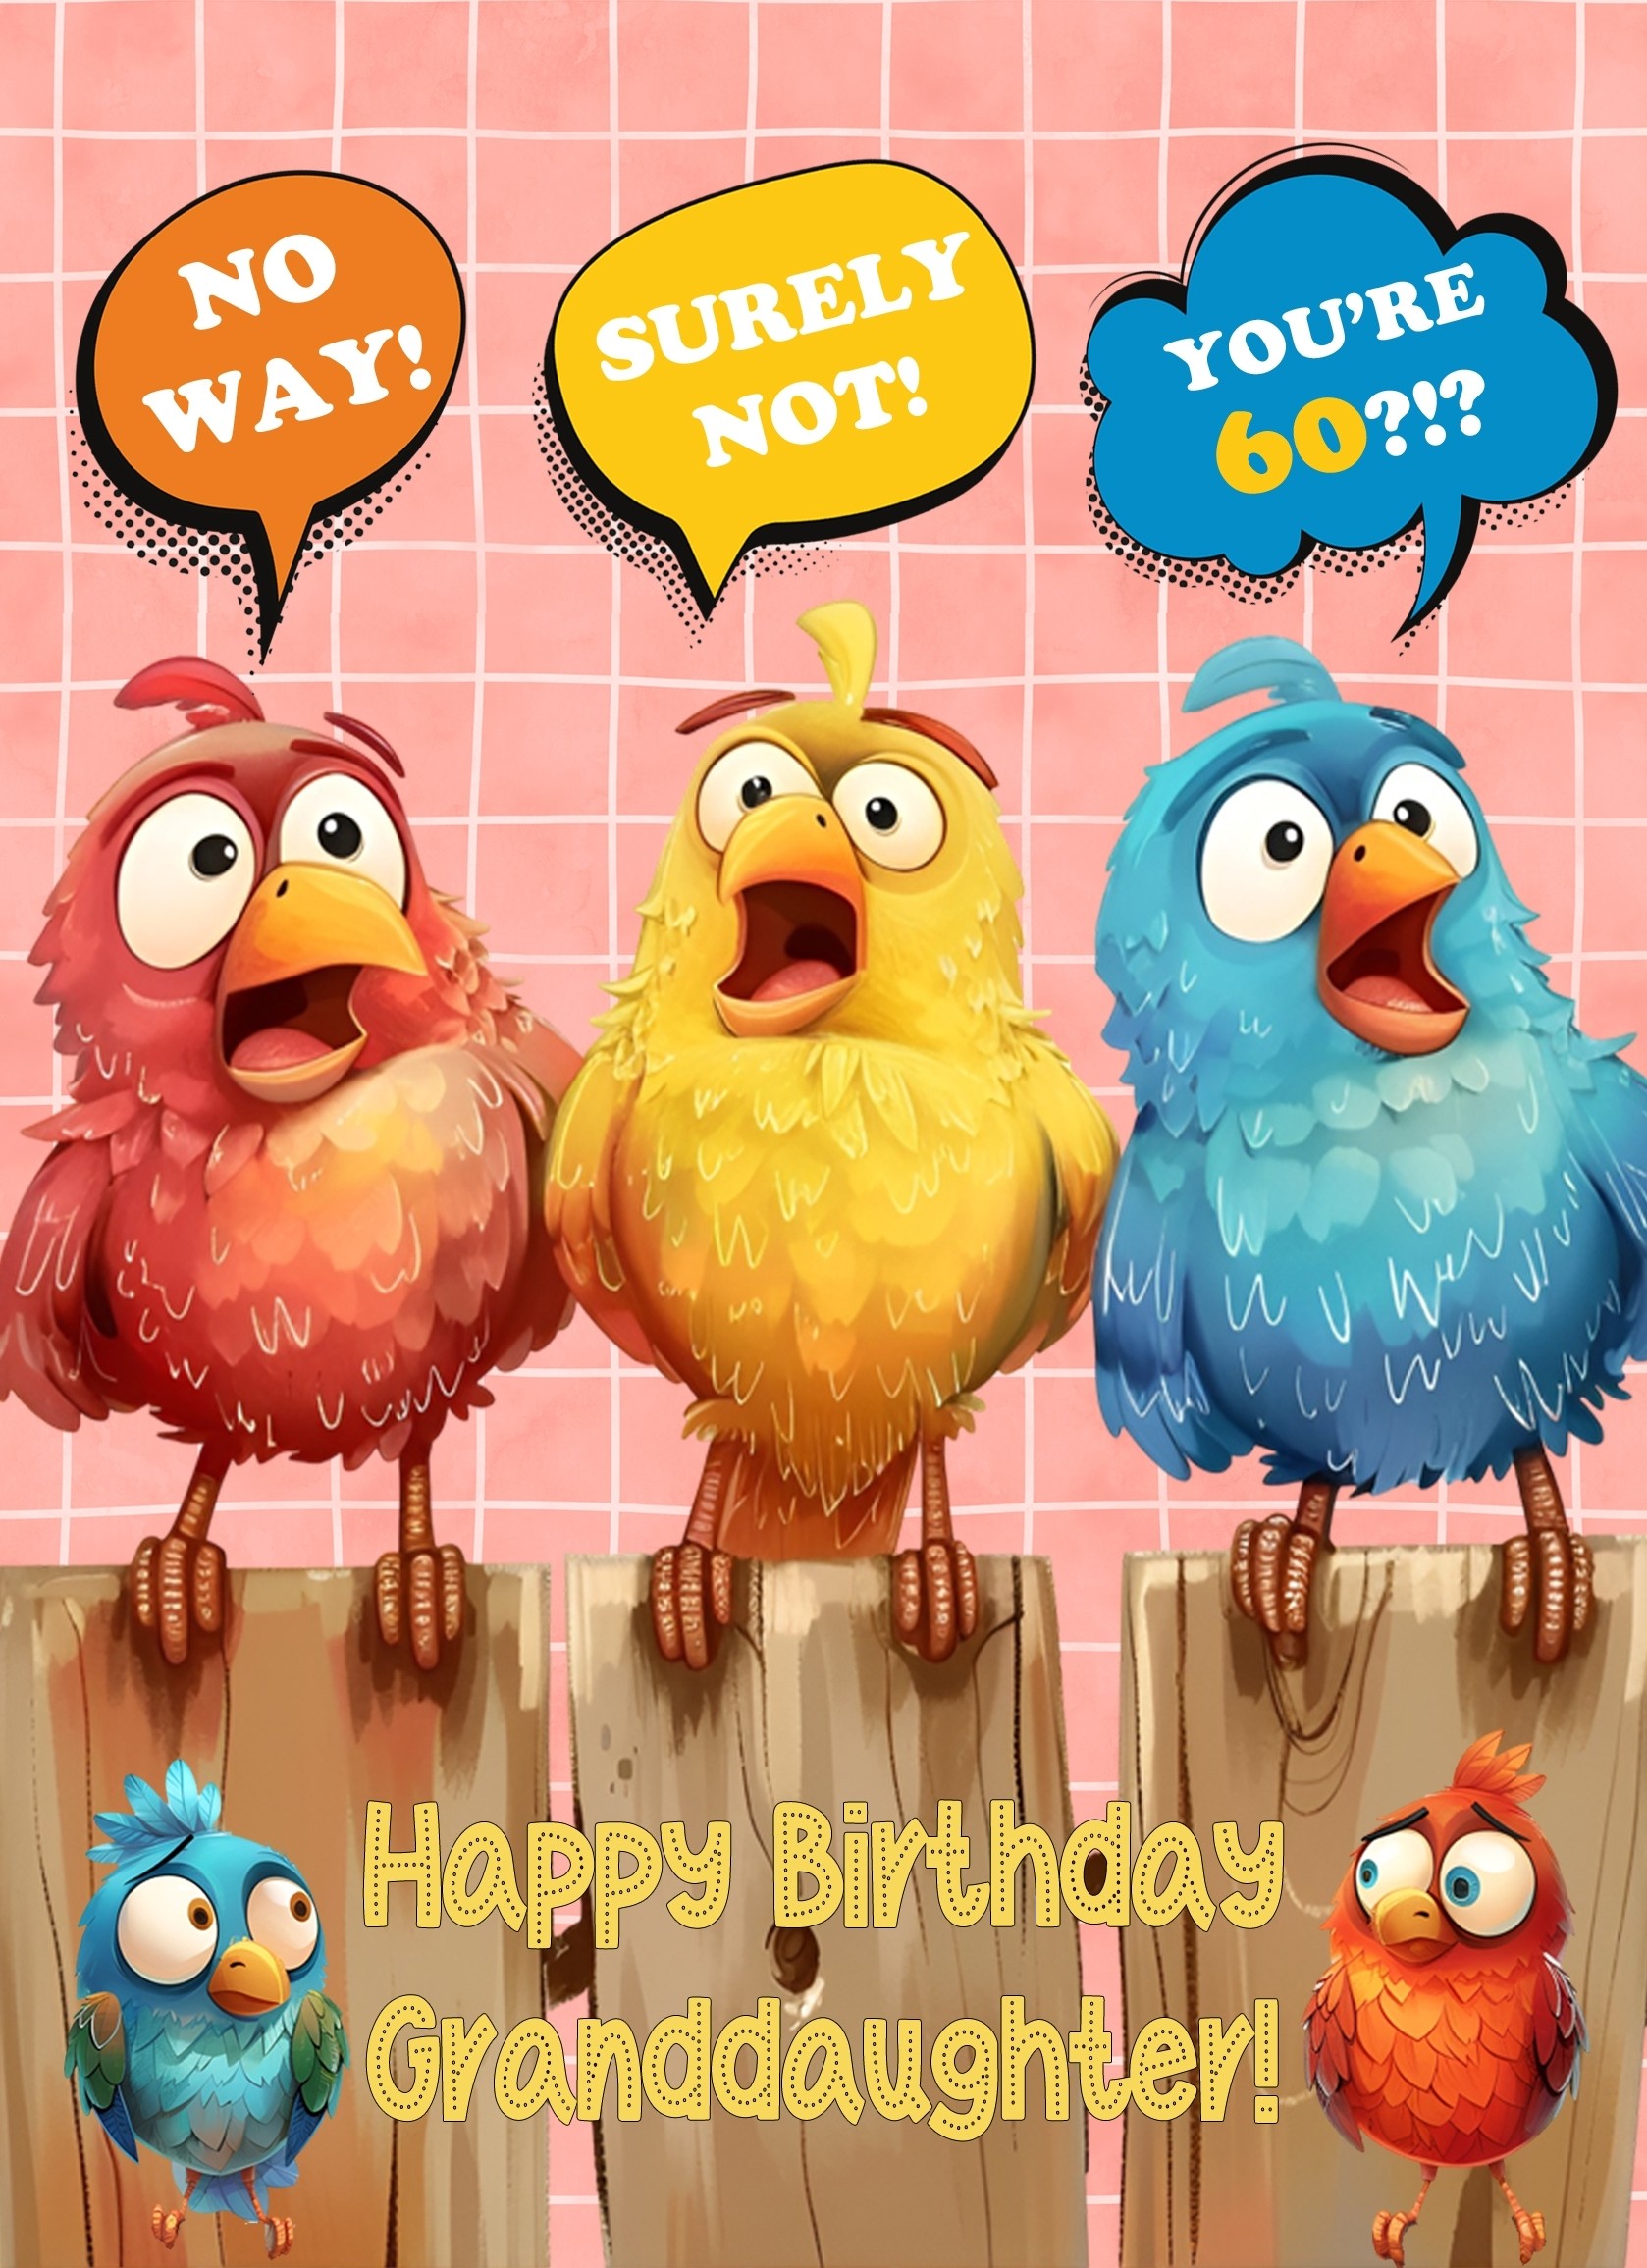 Granddaughter 60th Birthday Card (Funny Birds Surprised)